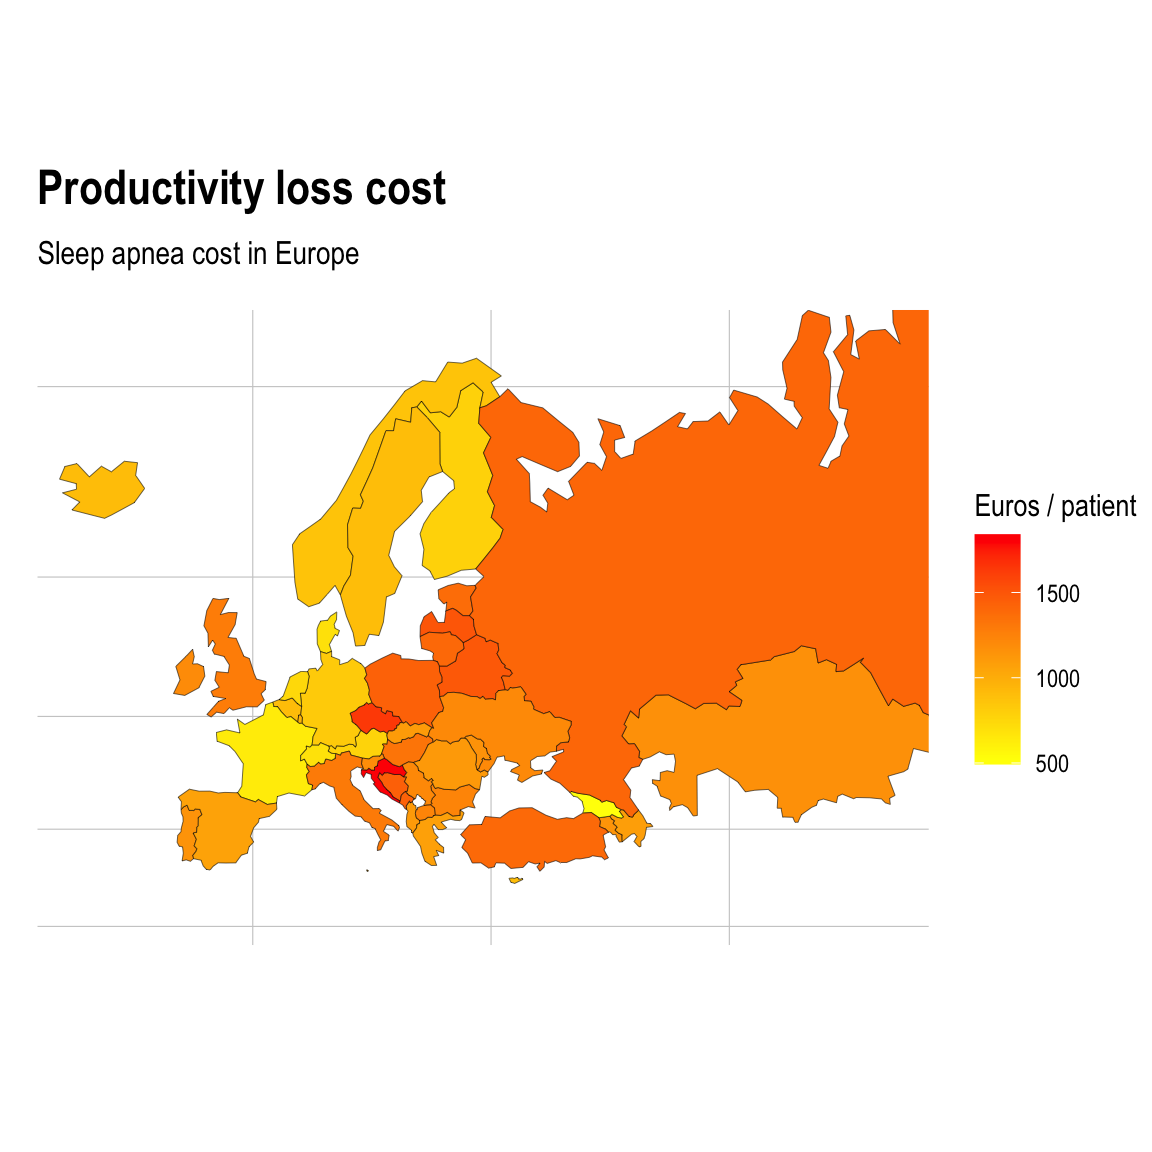 Estimated sleep apnea productivity losses cost per patient in Europe.